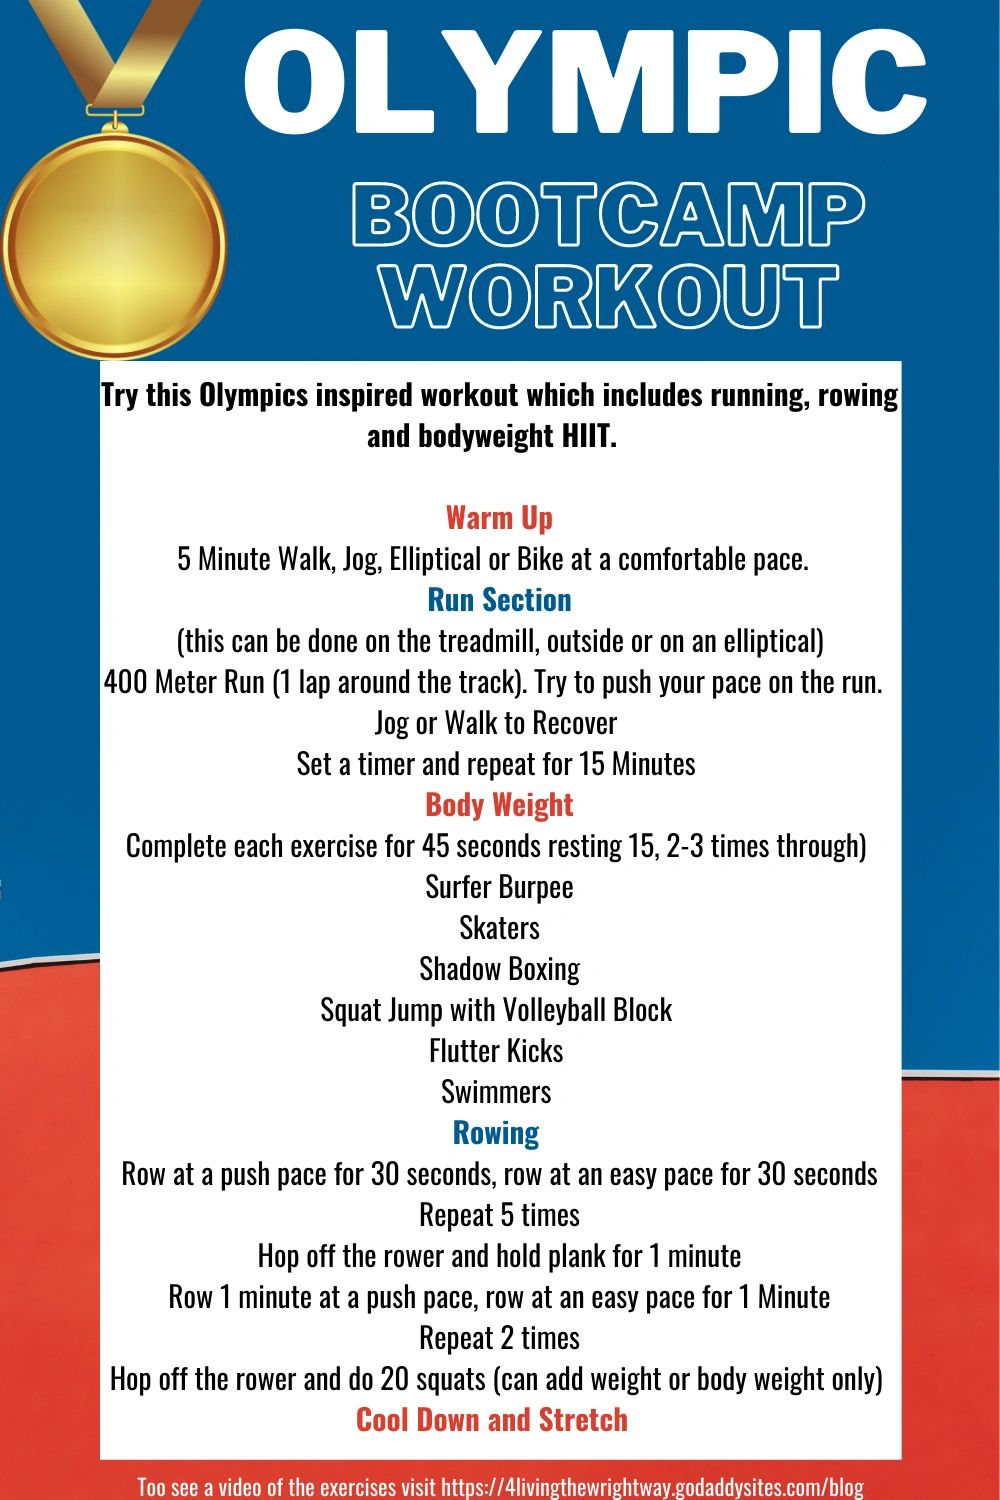 Total Body AMRAP Workout (45 Minutes)